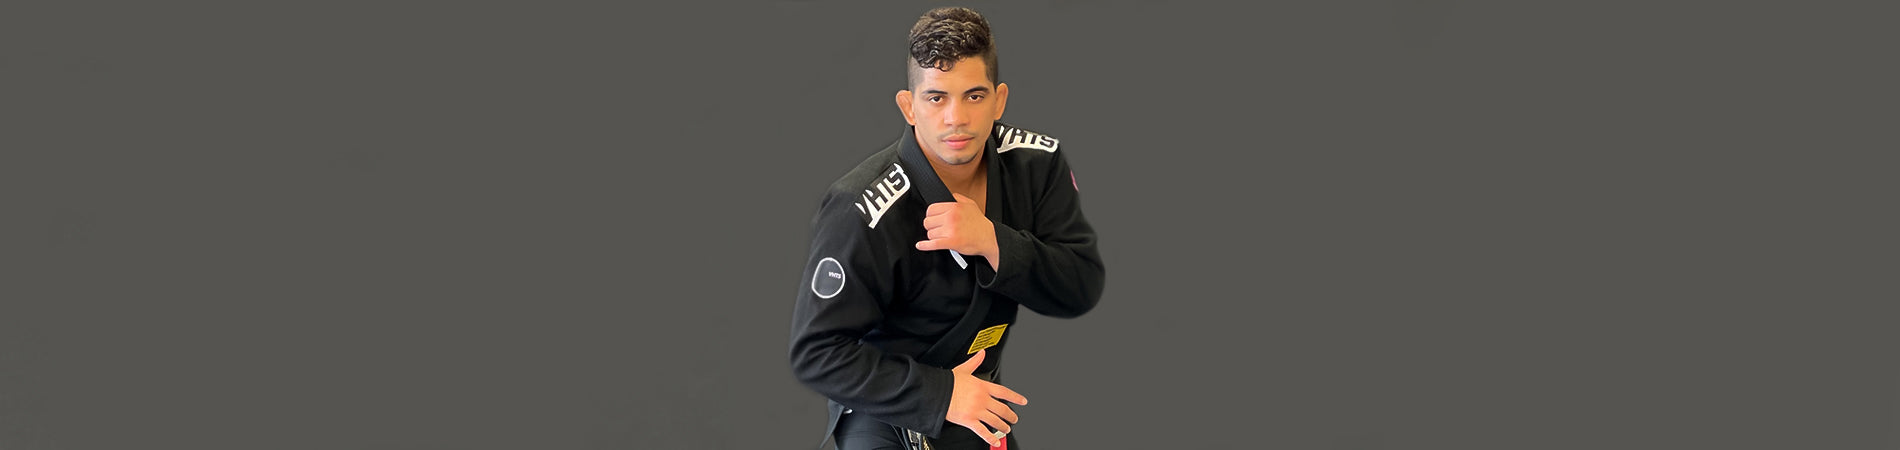 Manuel Ribamar - BJJ Black Belt & Middleweight Champion